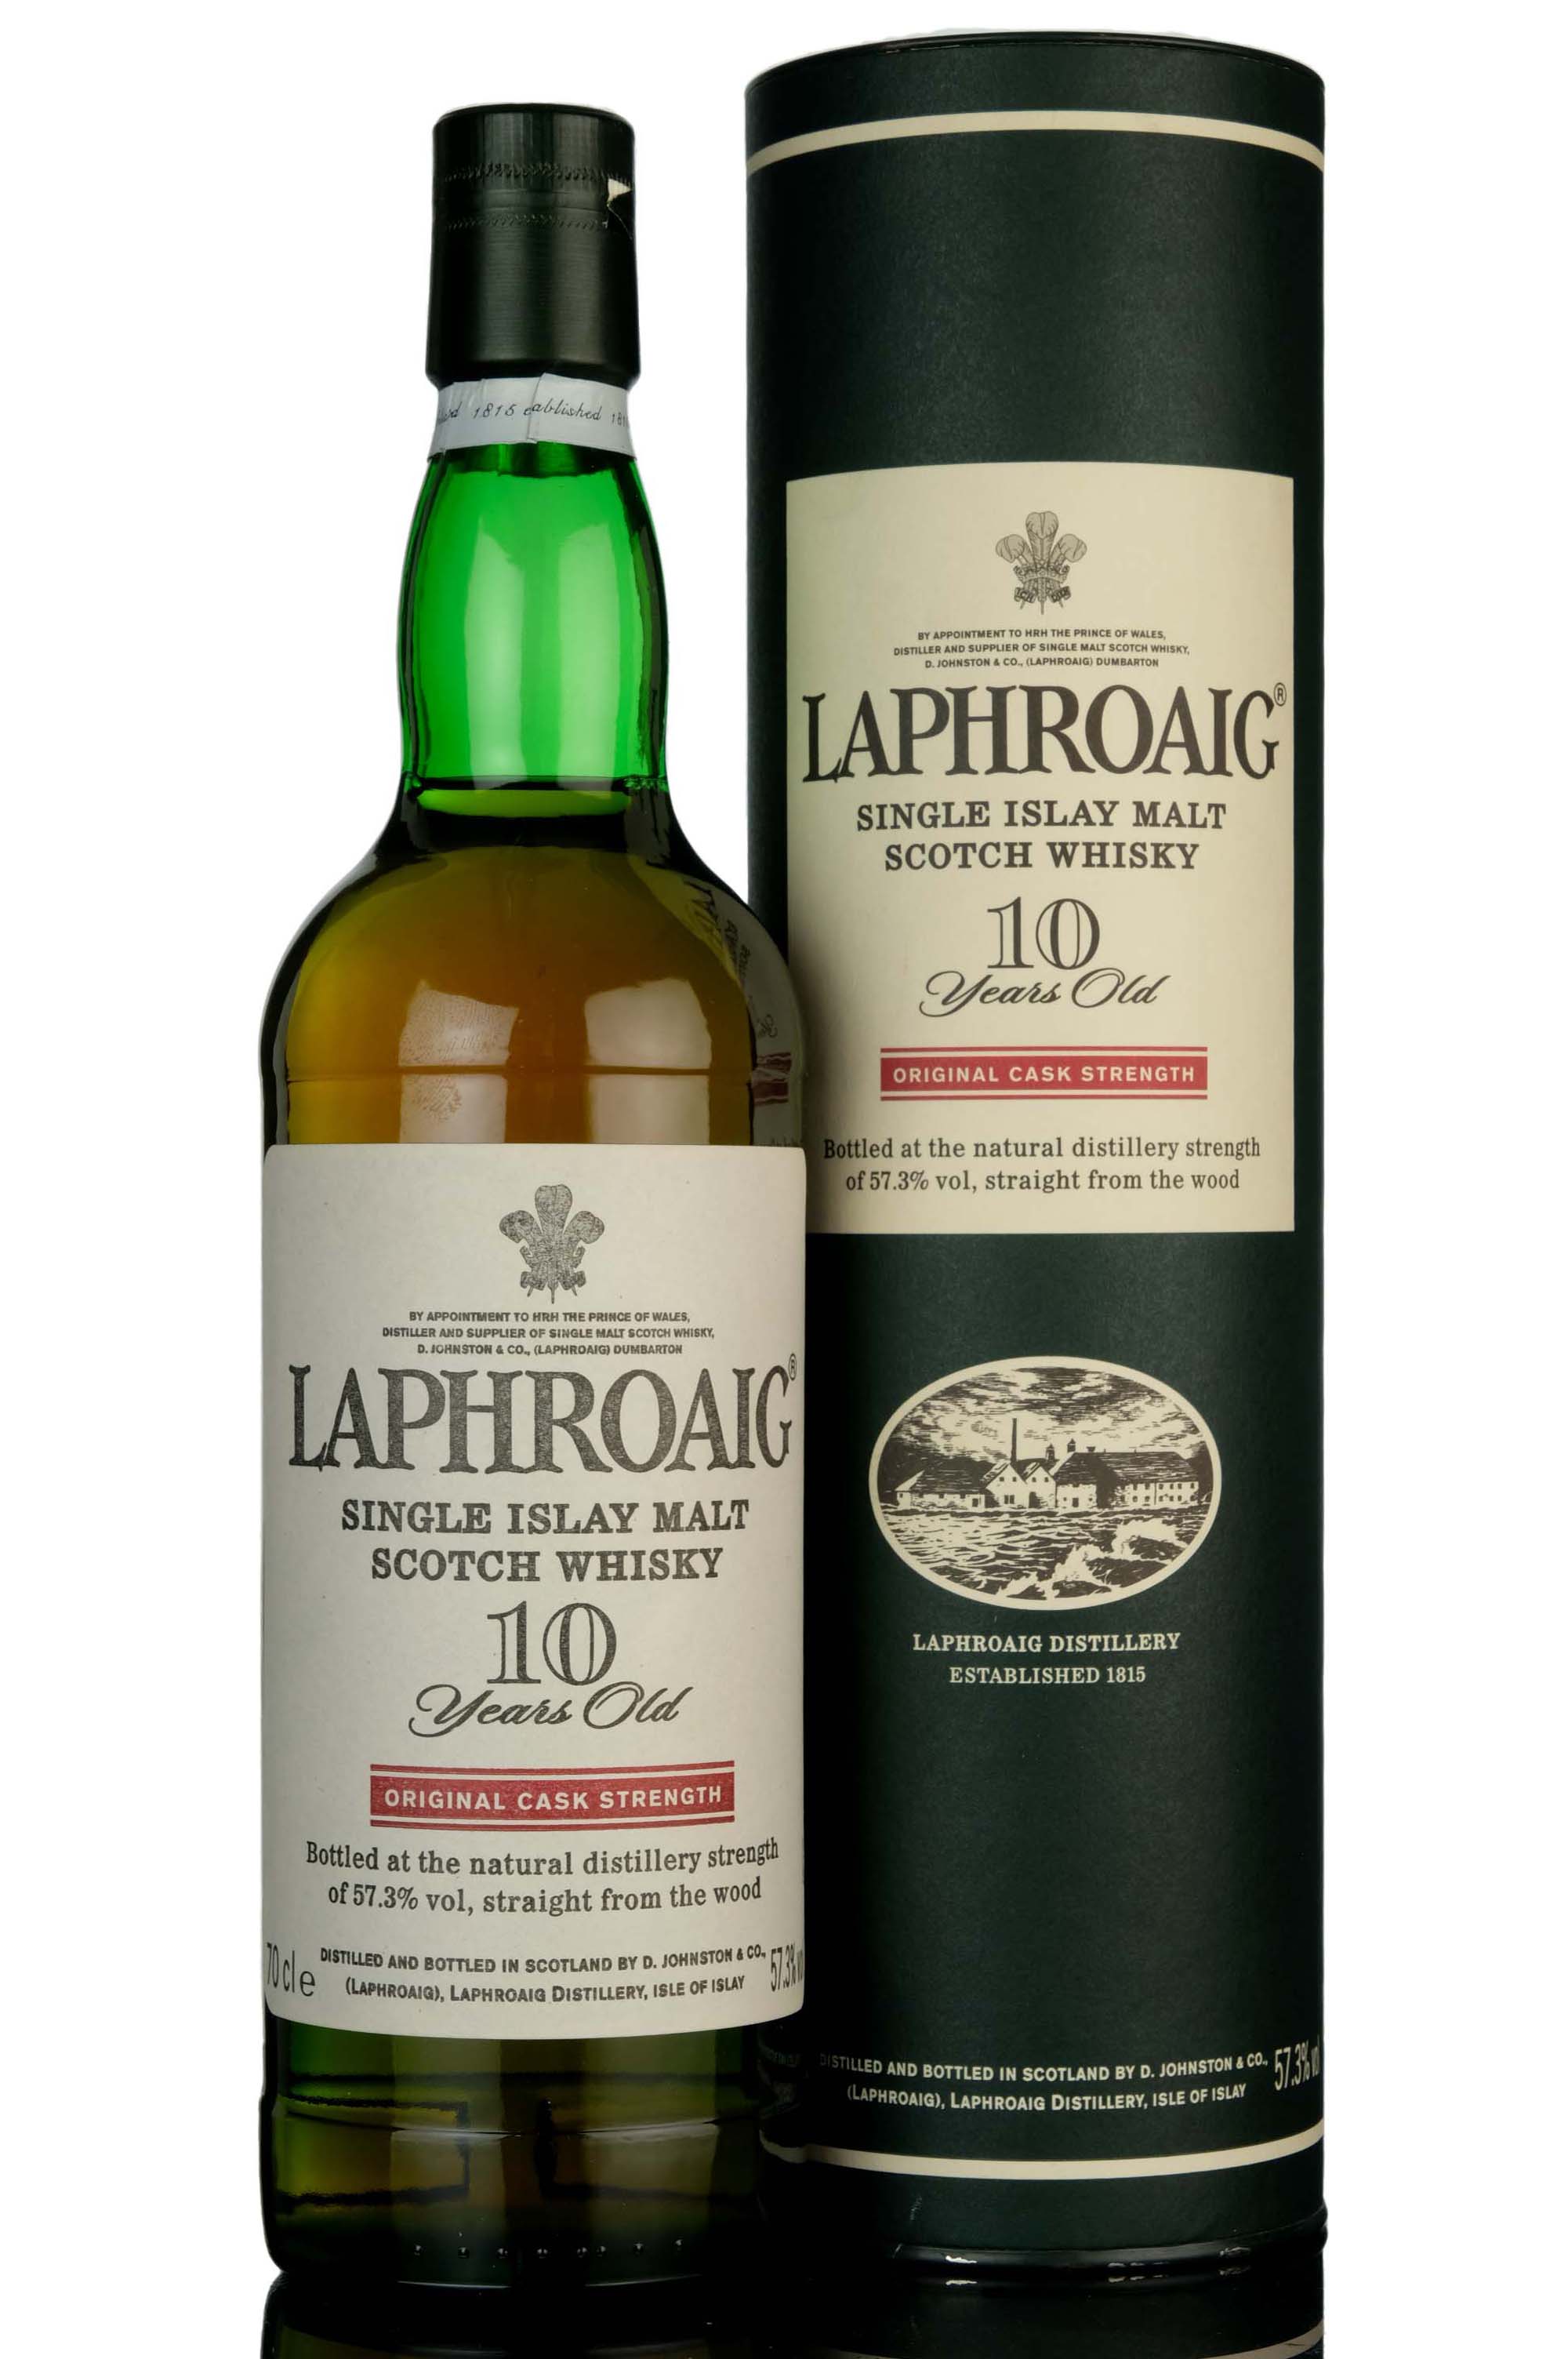 Laphroaig 10 Year Old - Original Cask Strength - 57.3% - 1990s